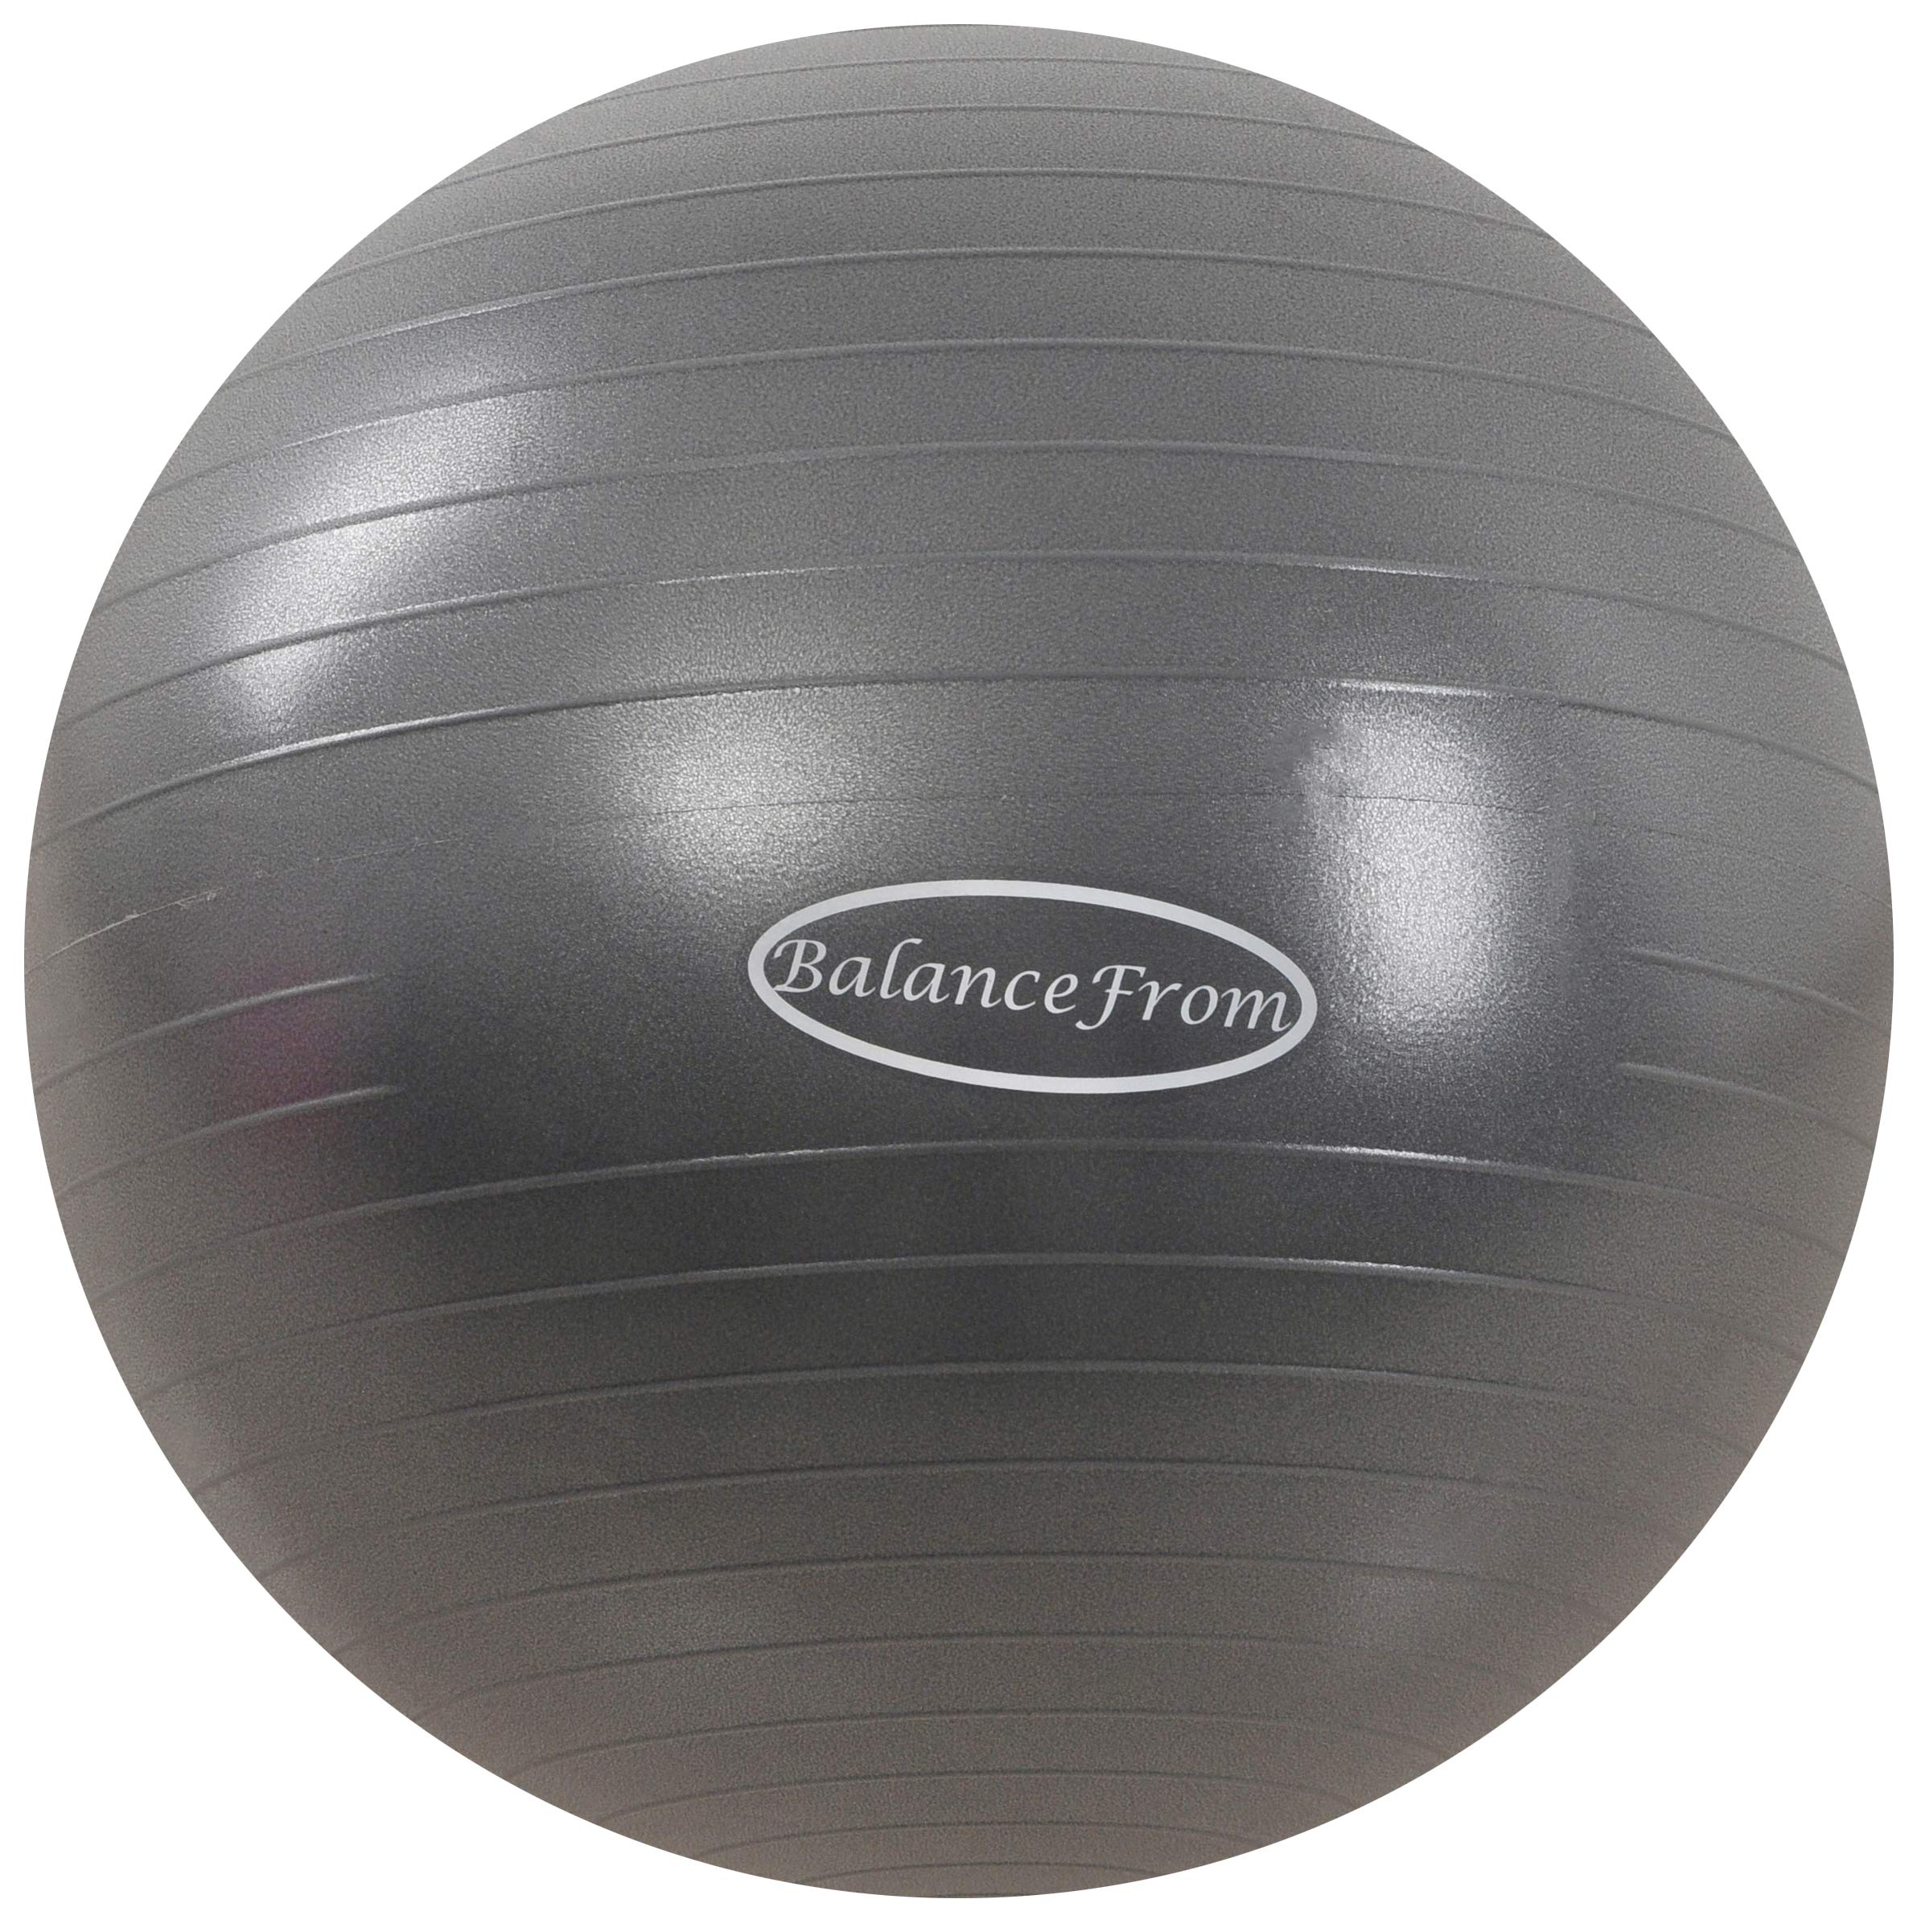 BalanceFrom Anti-Burst and Slip Resistant Exercise Ball Yoga Ball